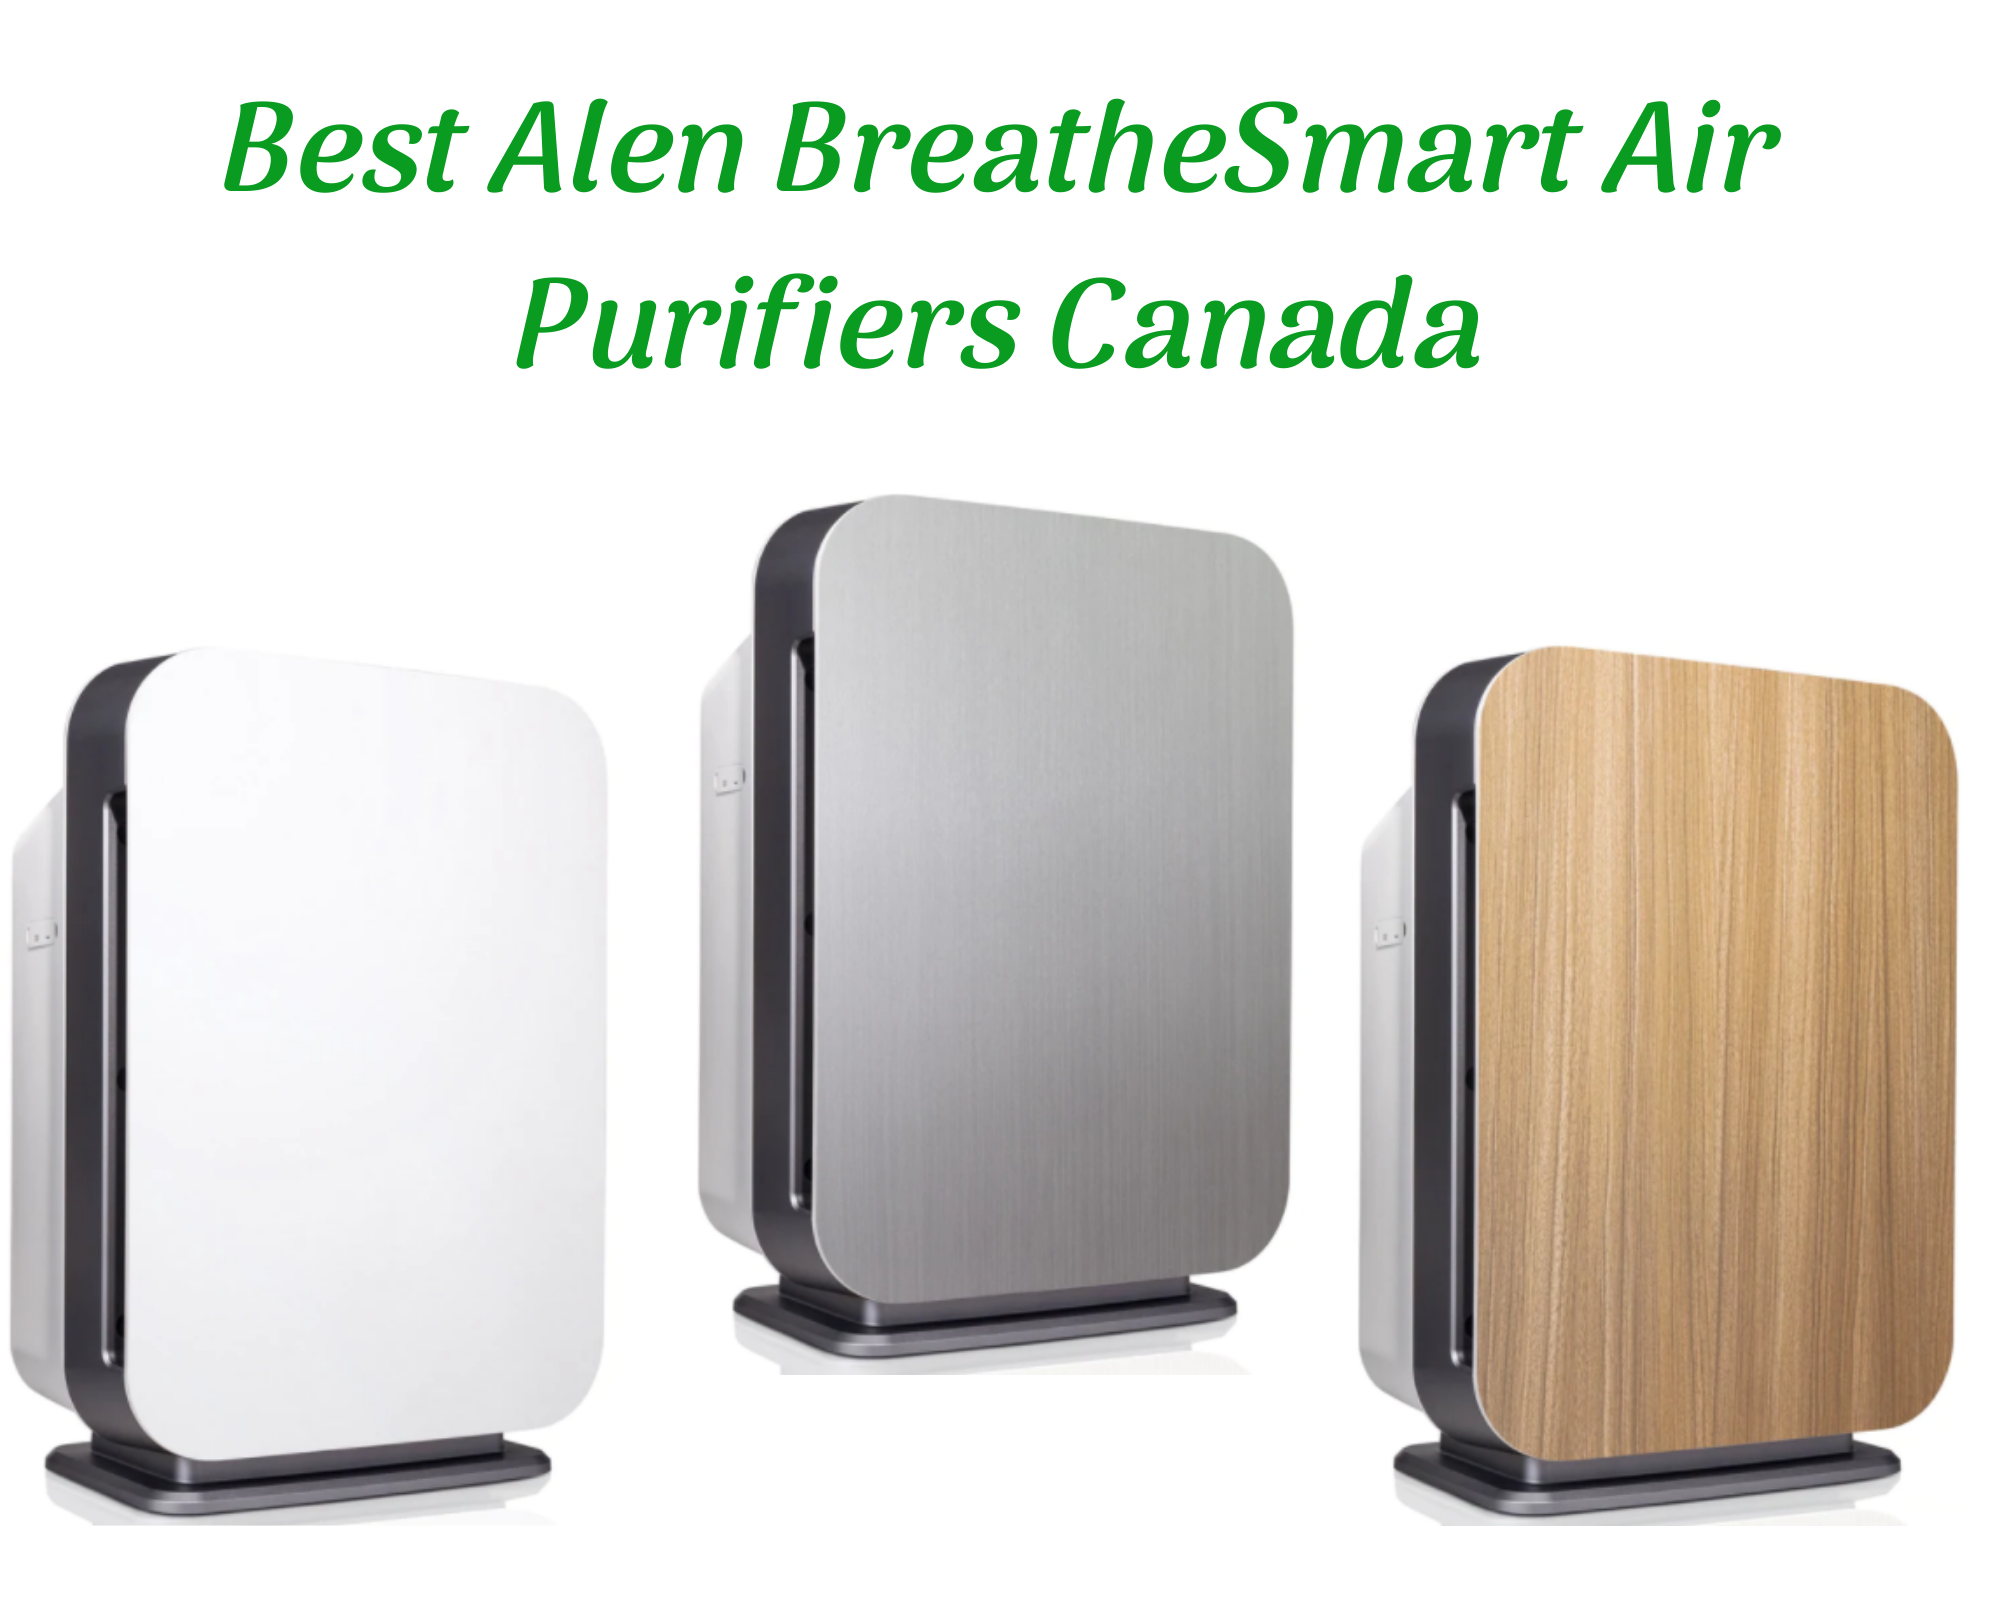 Best Alen BreatheSmart Air Purifier Canada - Best Alen Air Purifier Canada